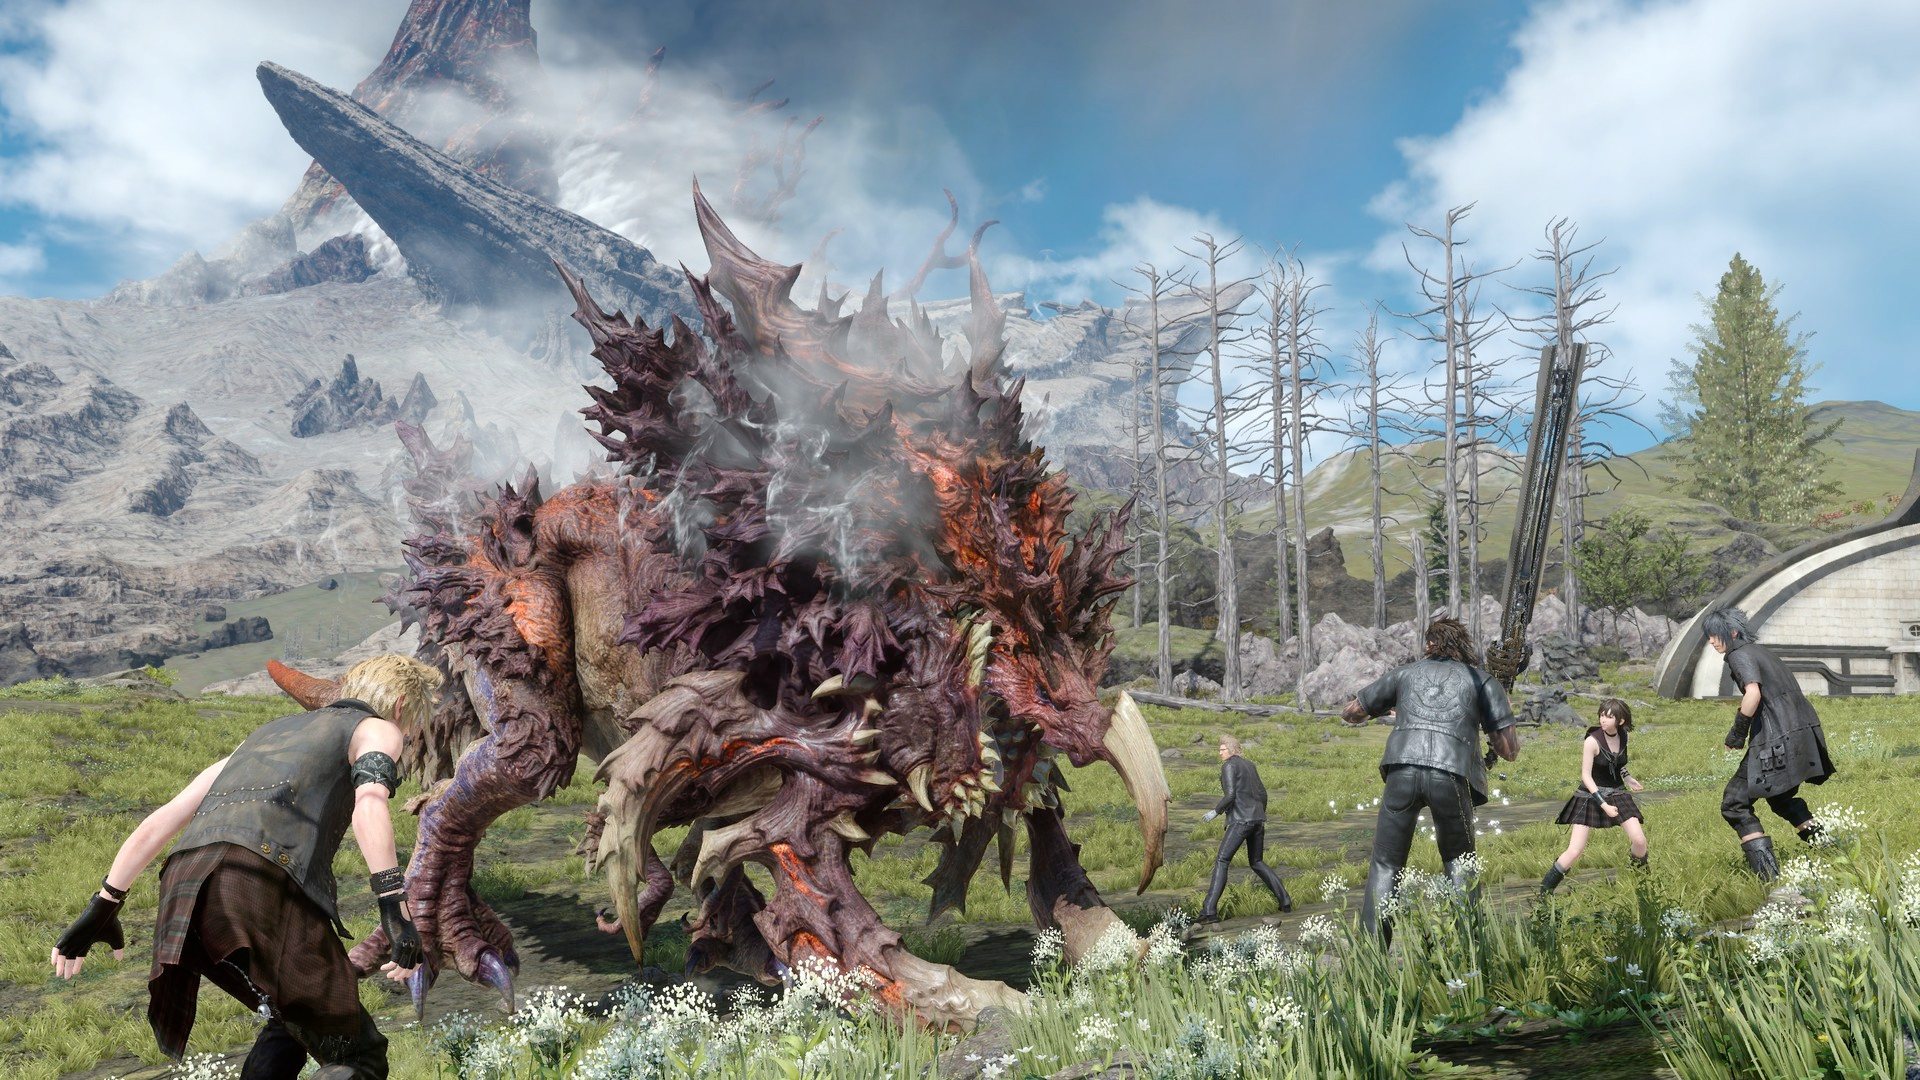 Final Fantasy XV characters battling a monster